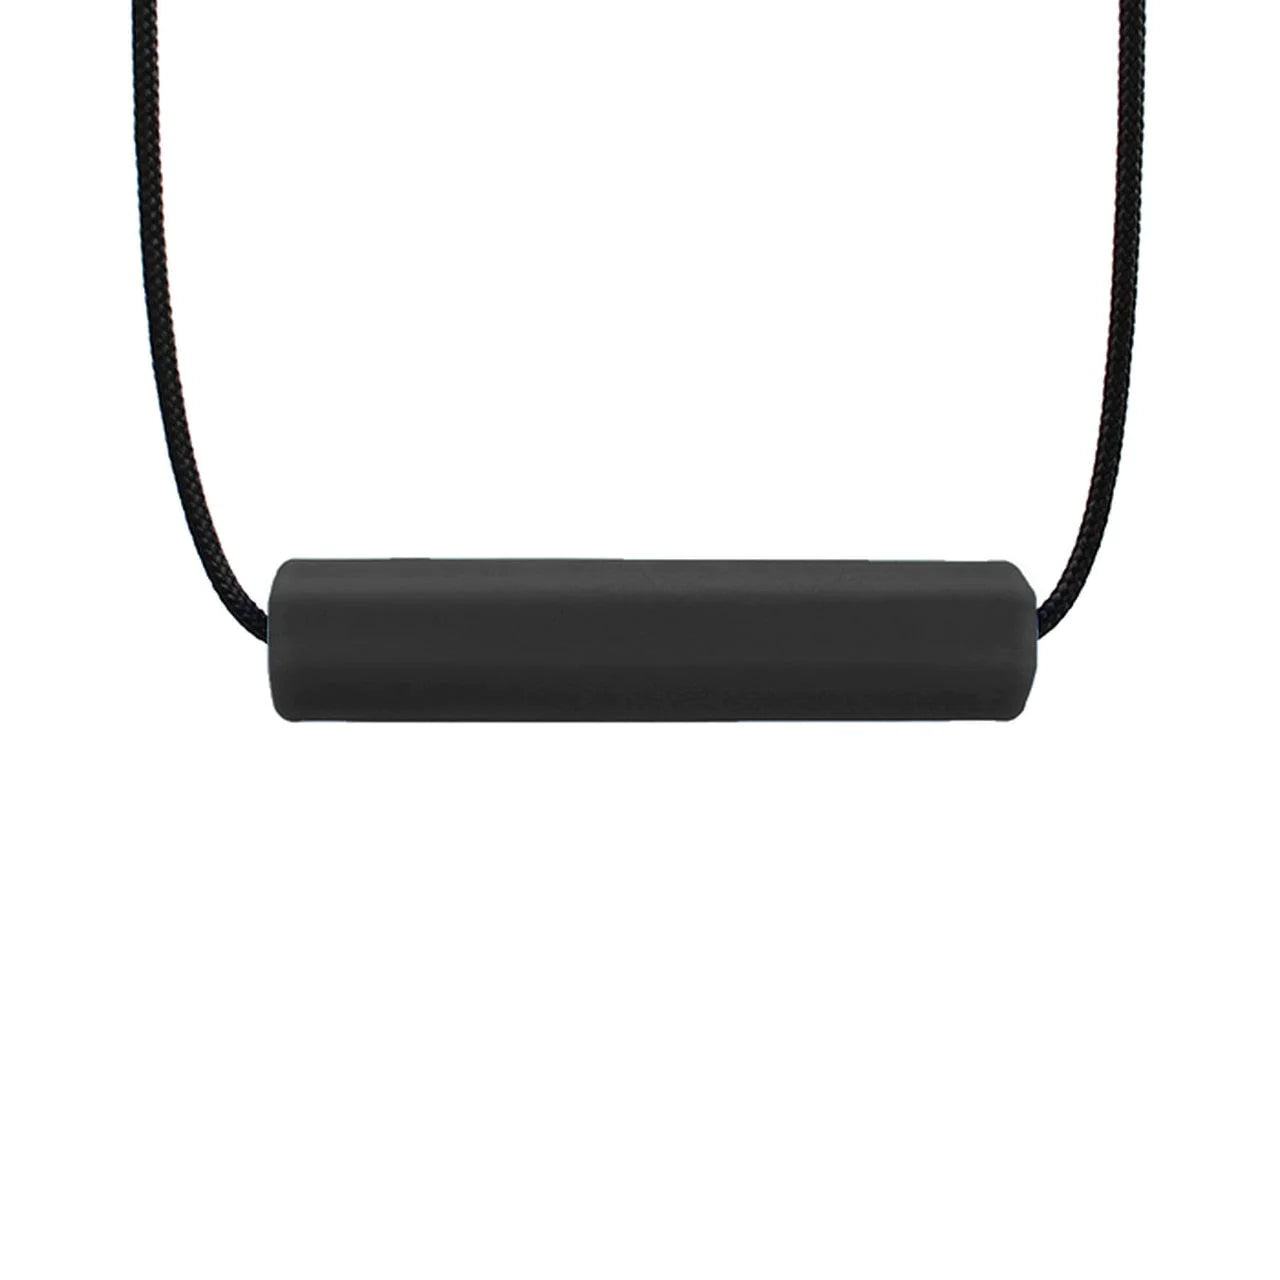 The black Krypto-Bite Chewable Tube Necklace.